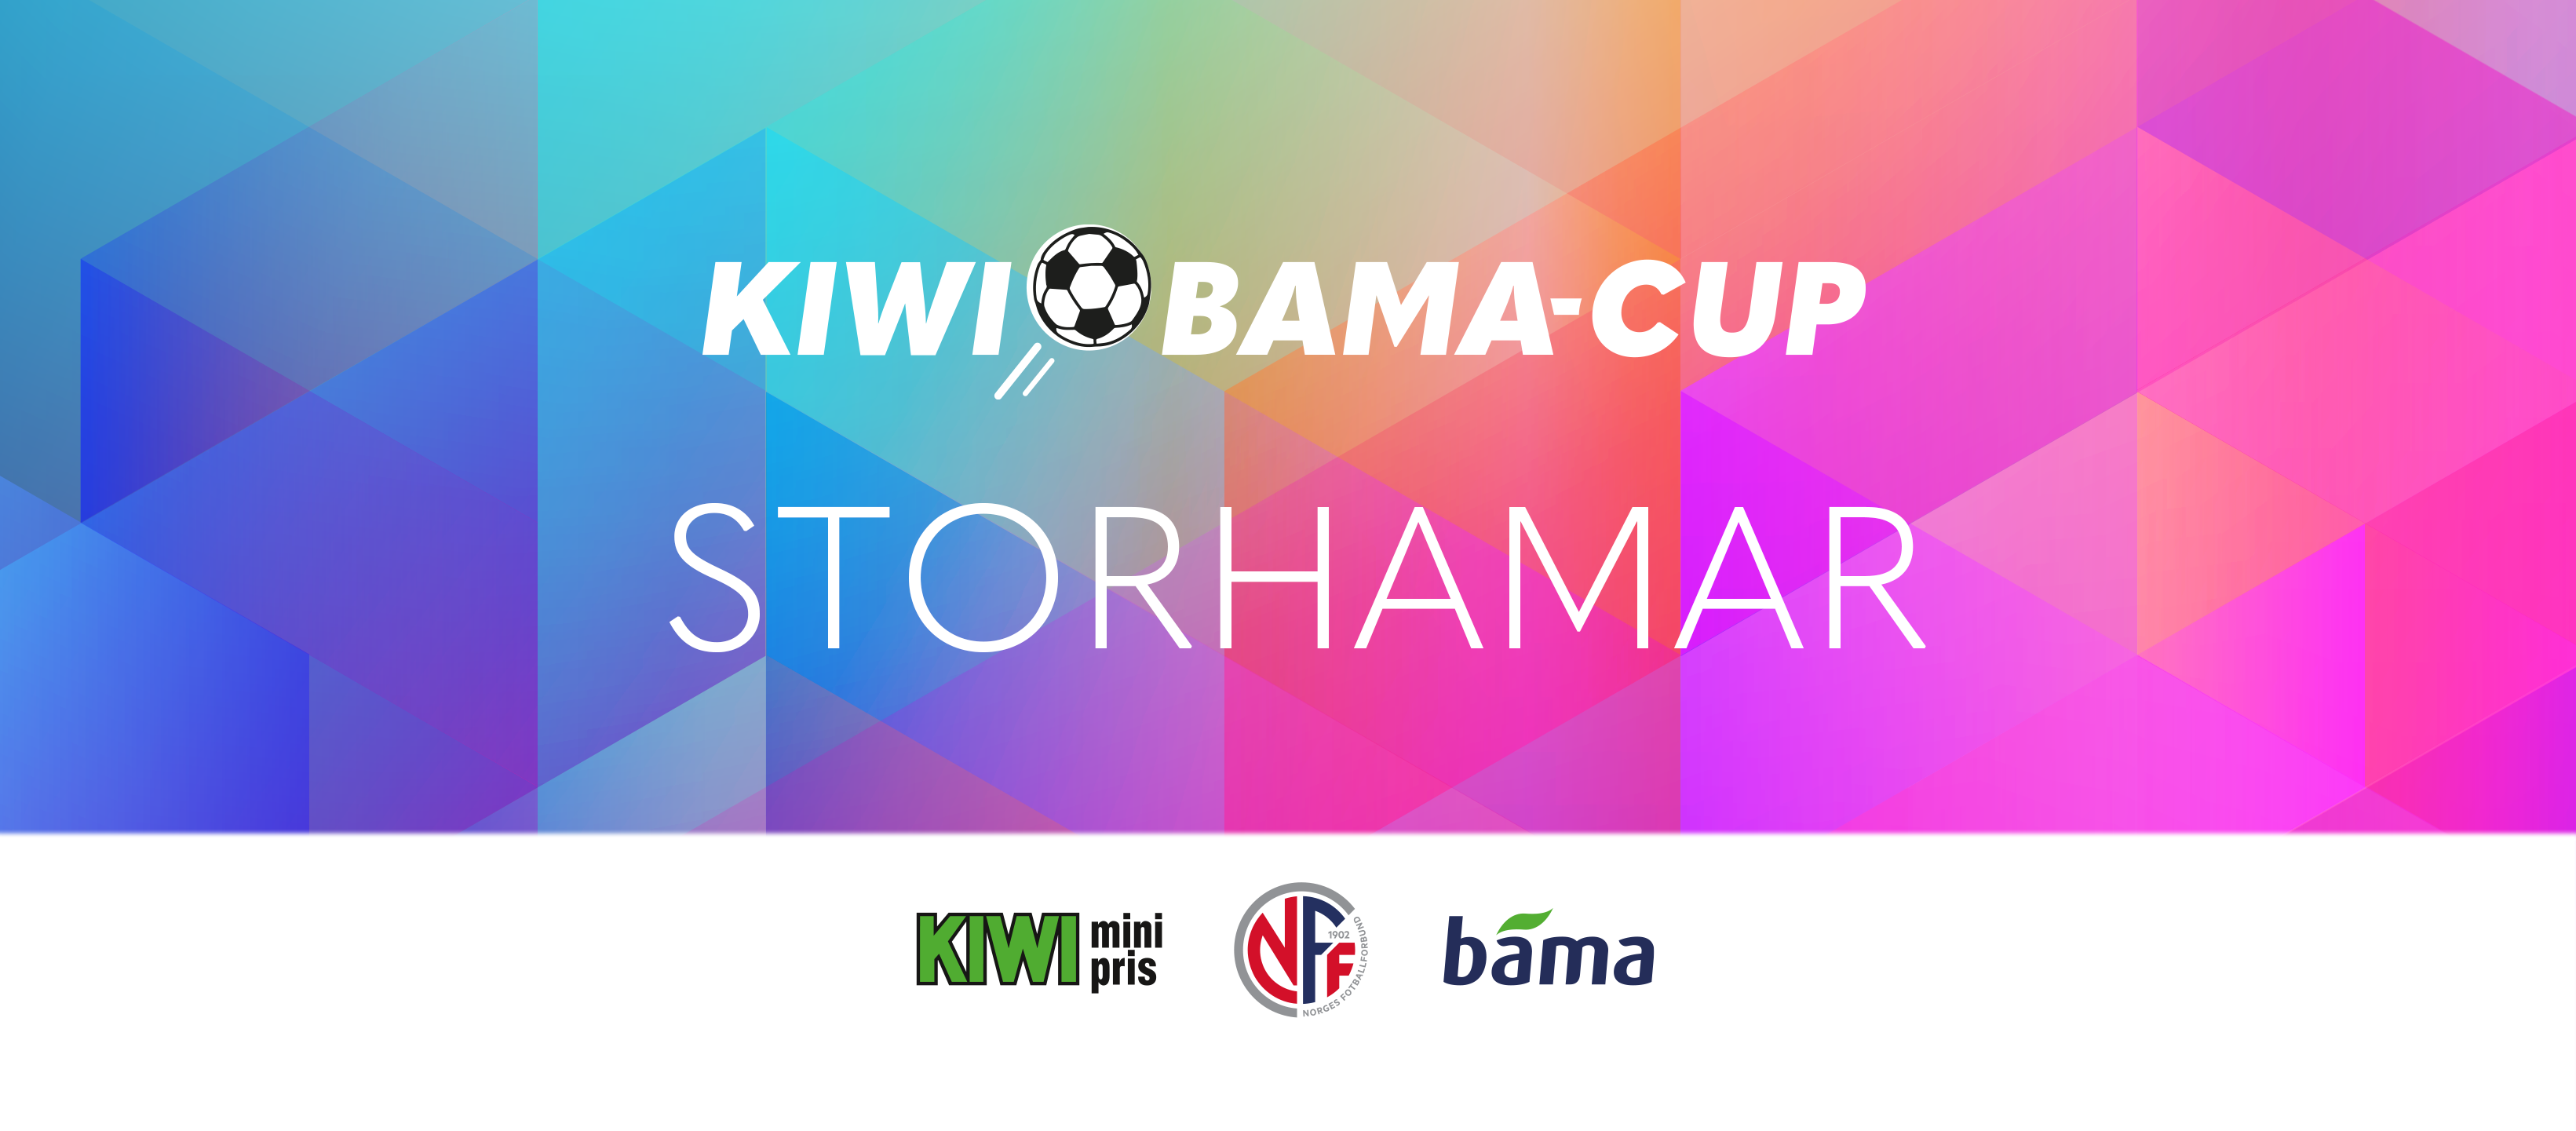 FB-BANNER KIWI-BAMA-Cup - Storhamar.png